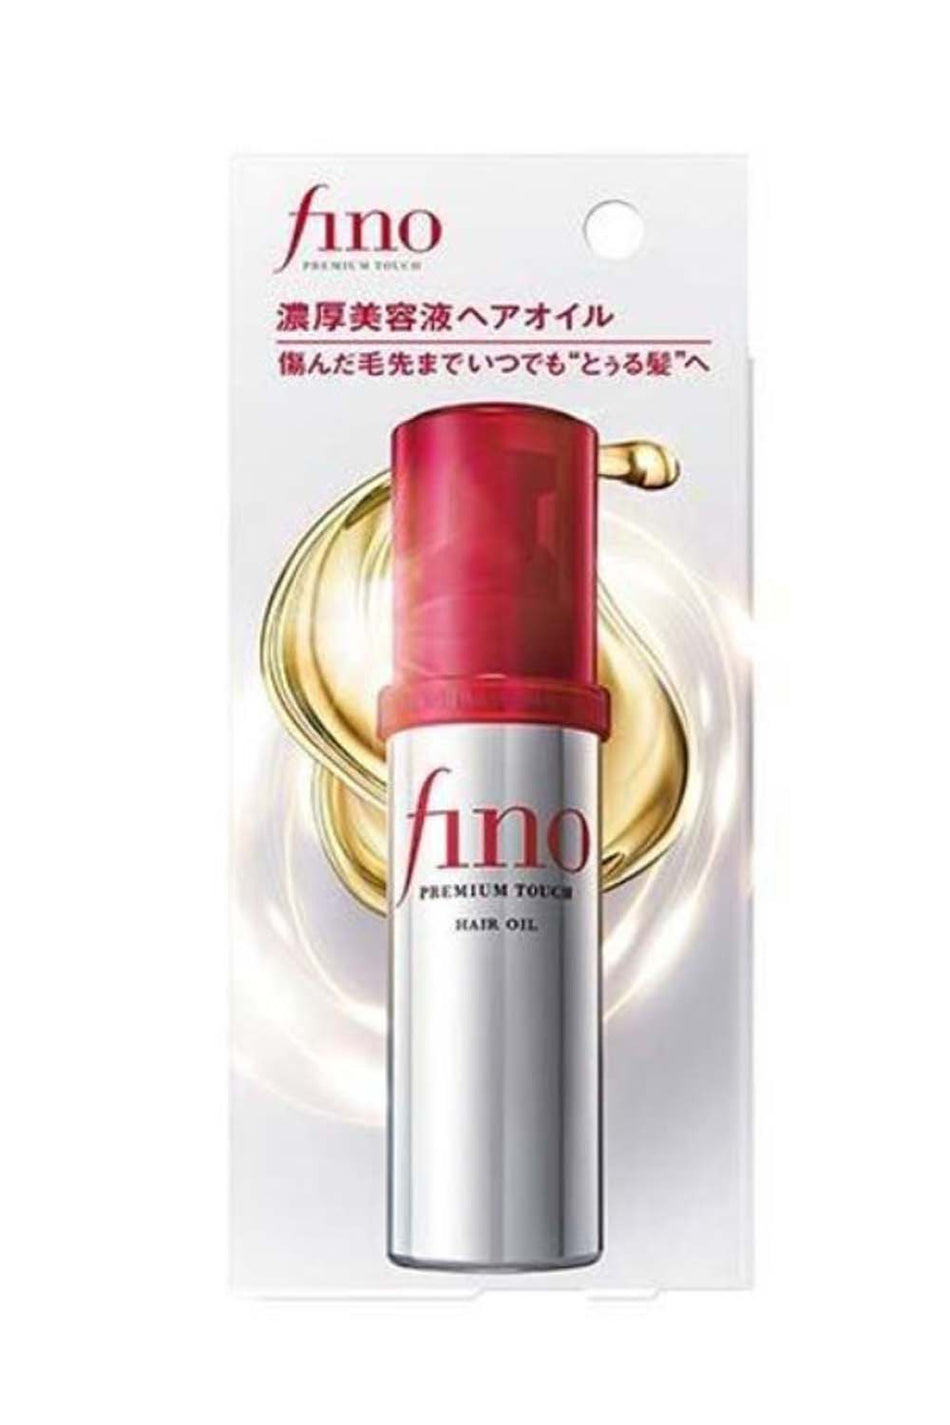 Shiseido  Fino Premium Touch Penetrating Essence Hair Oil